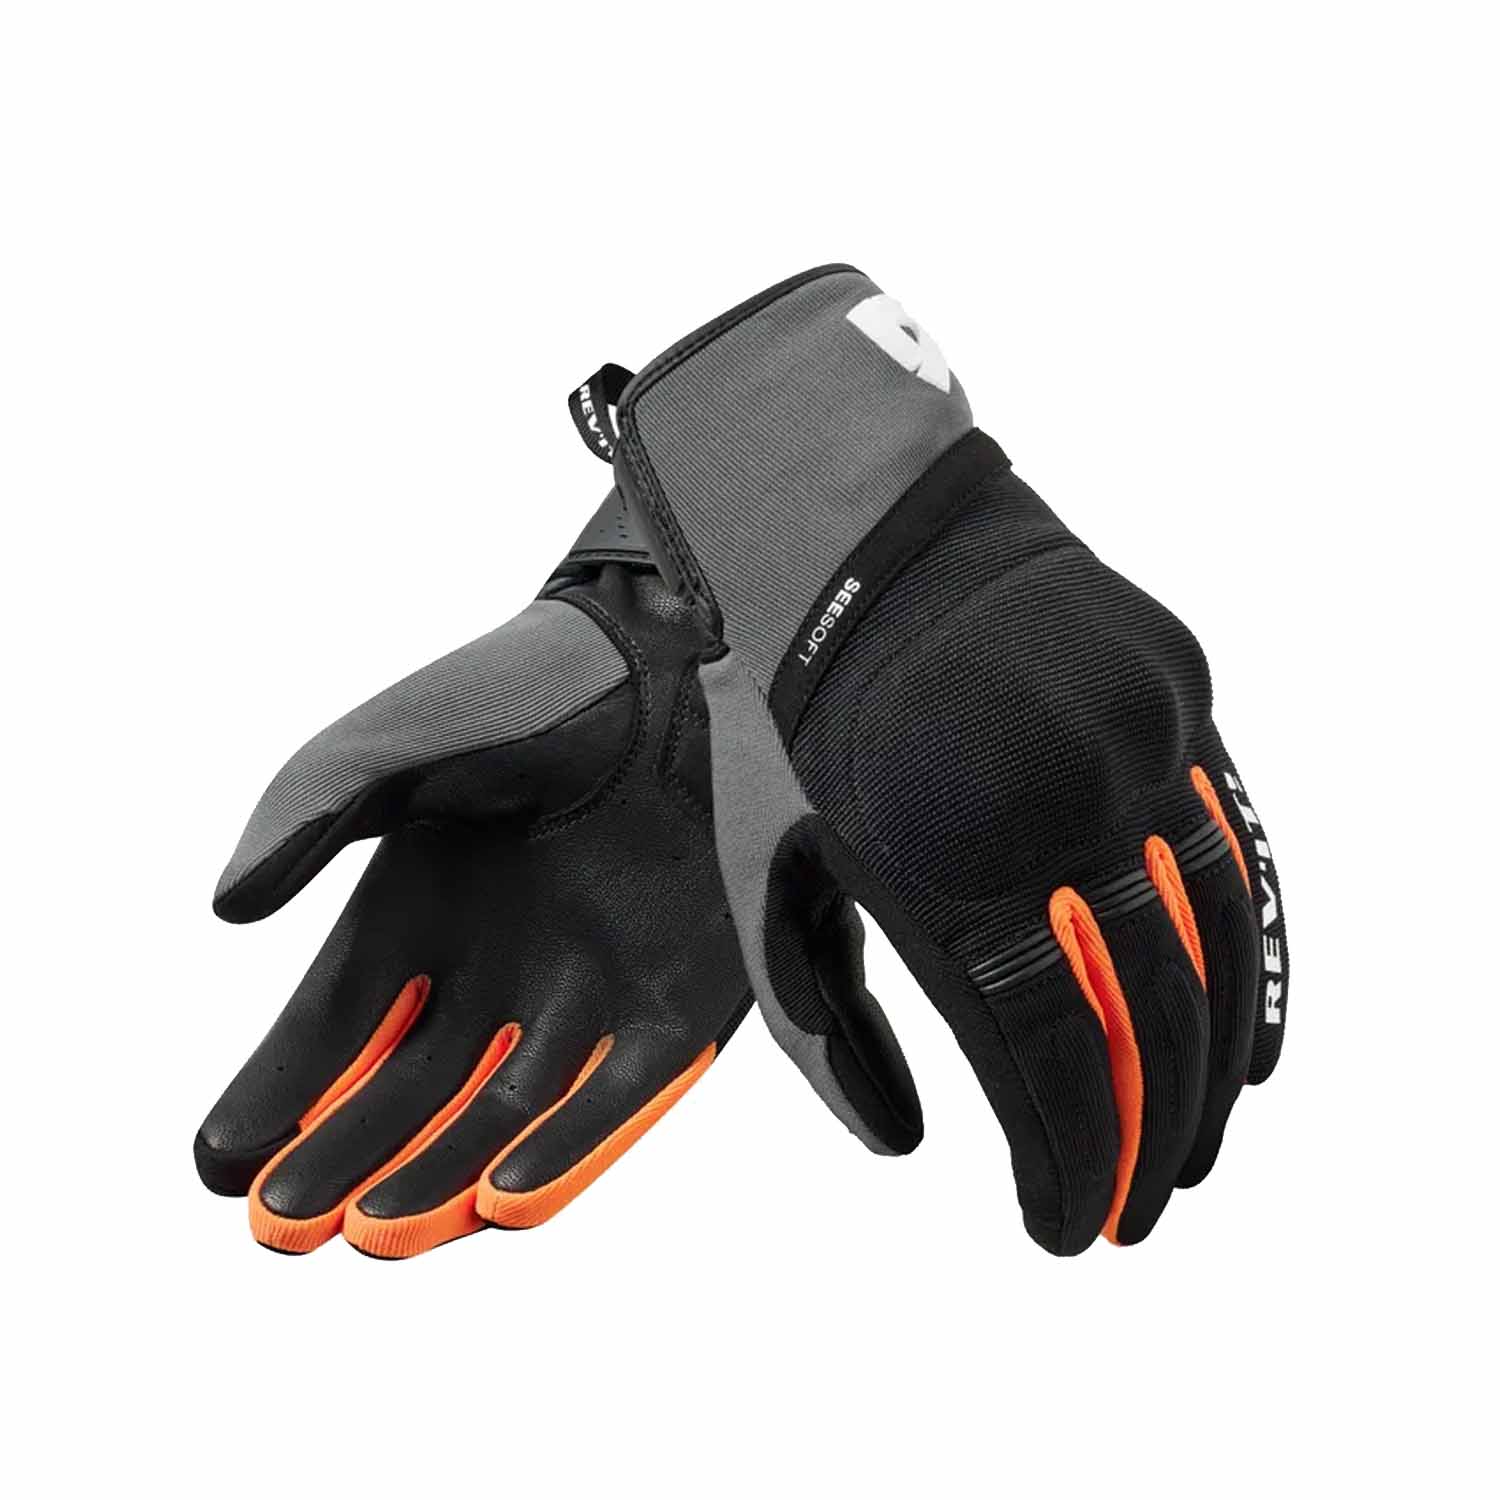 Image of EU REV'IT! Mosca 2 Gloves Black Orange Taille S